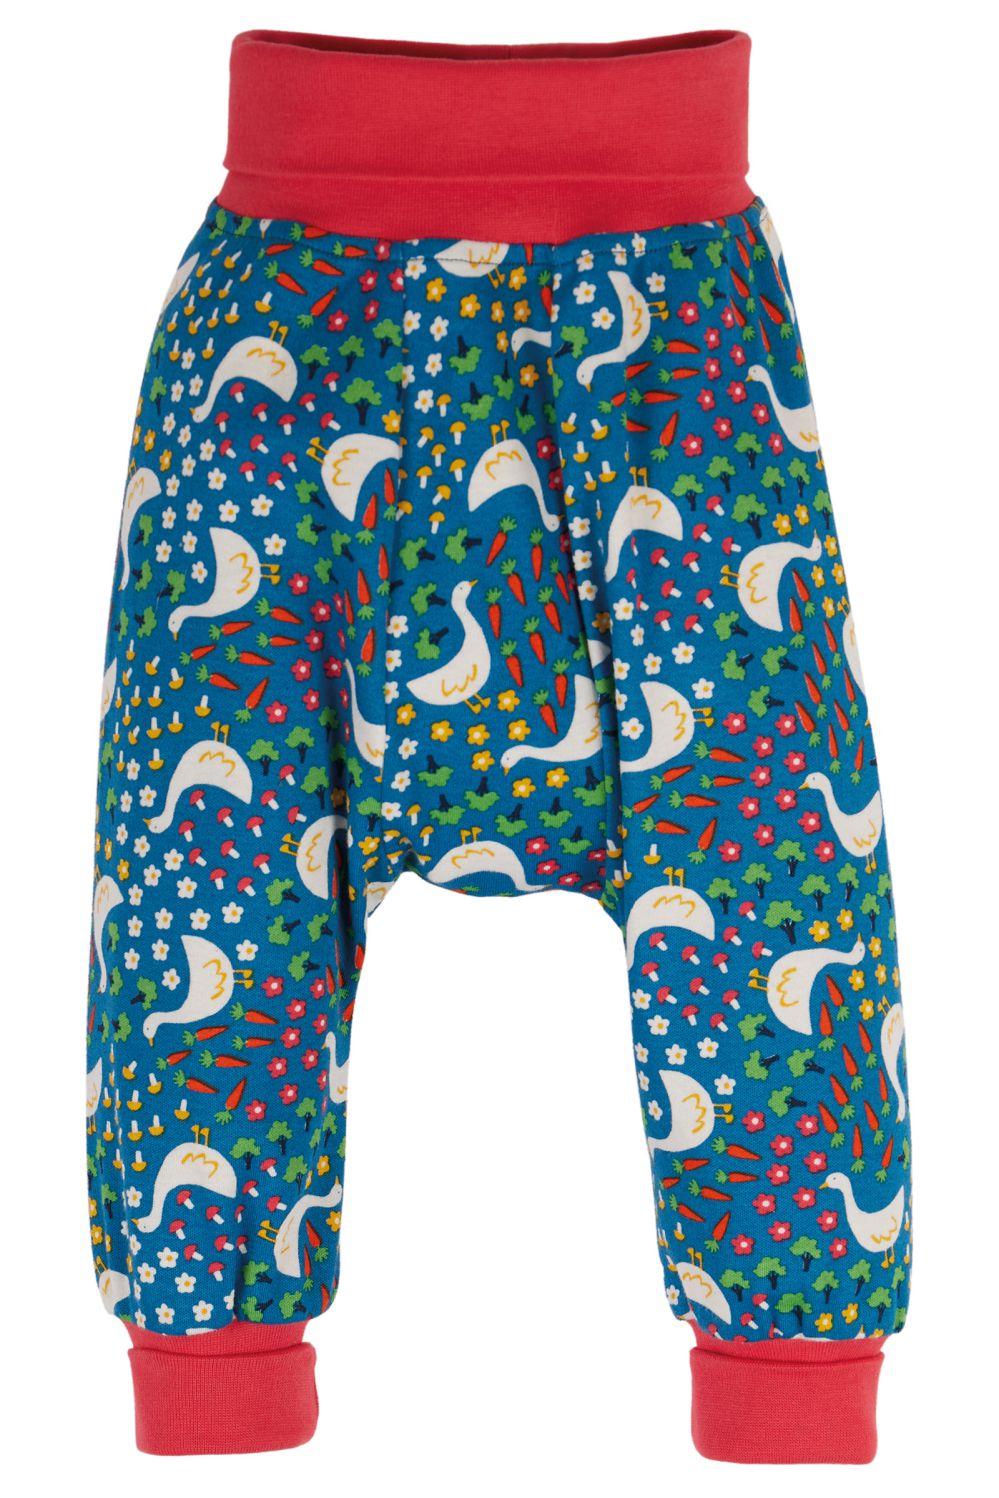 Frugi Parsnip Pants (Size: 18-24 Months / Print: Blue Springtime Geese)